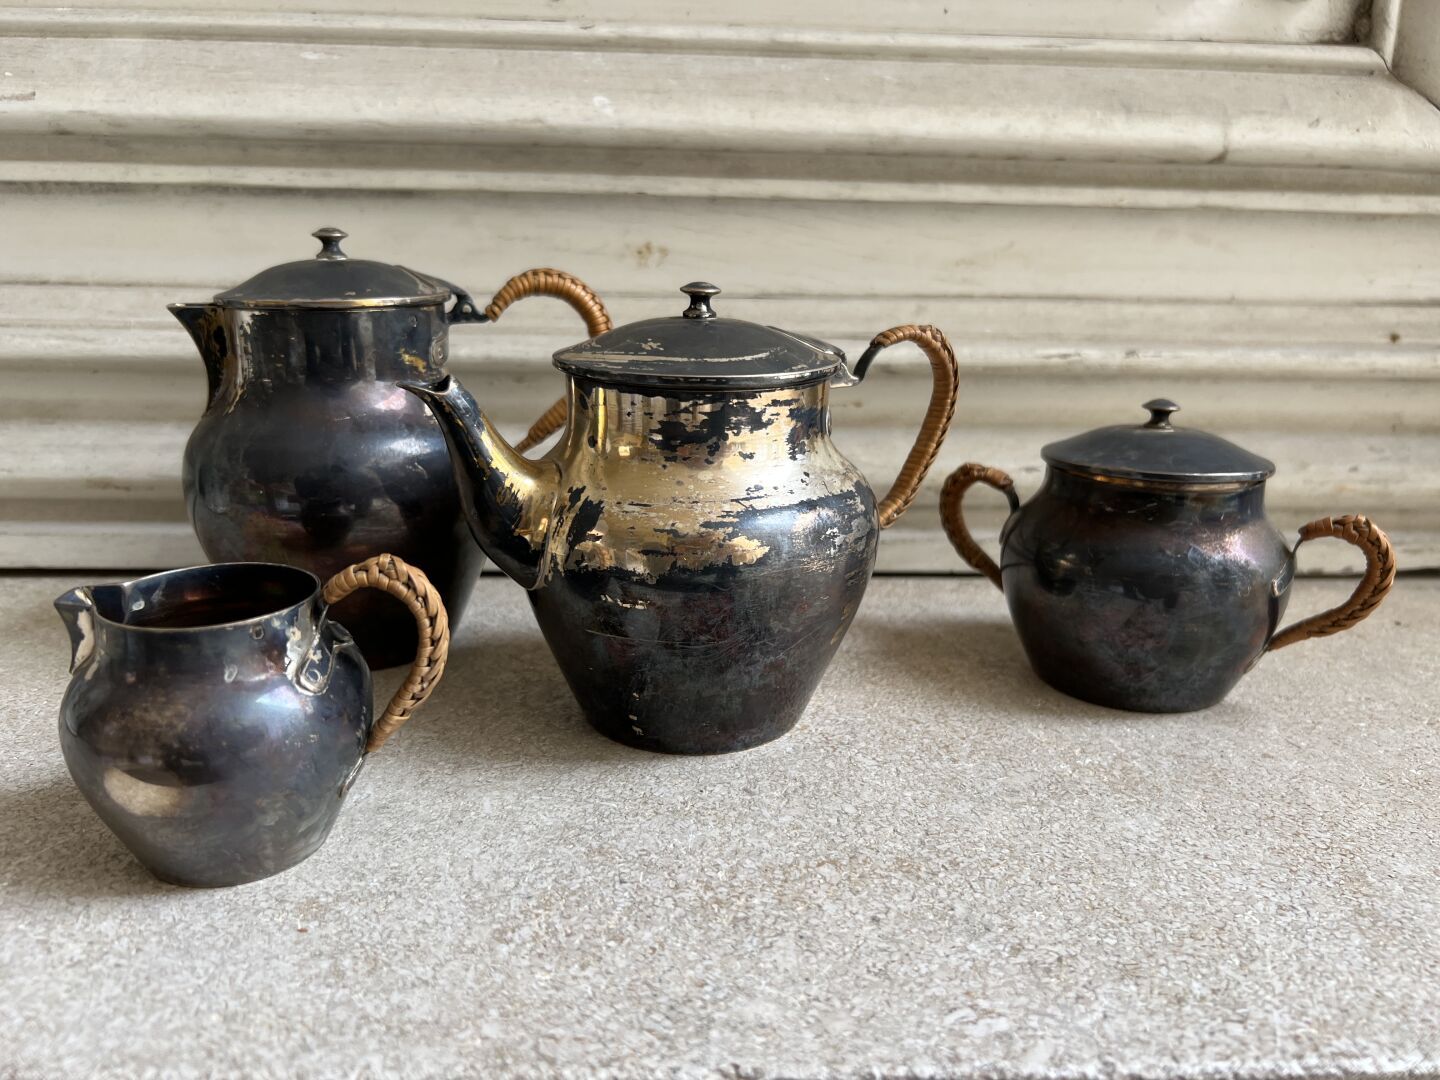 Null 一套Minerva银质茶具和咖啡具，包括一个茶壶，一个咖啡壶，一个有盖糖碗和一个牛奶壶。
手柄是扣着的。
毛重：785克